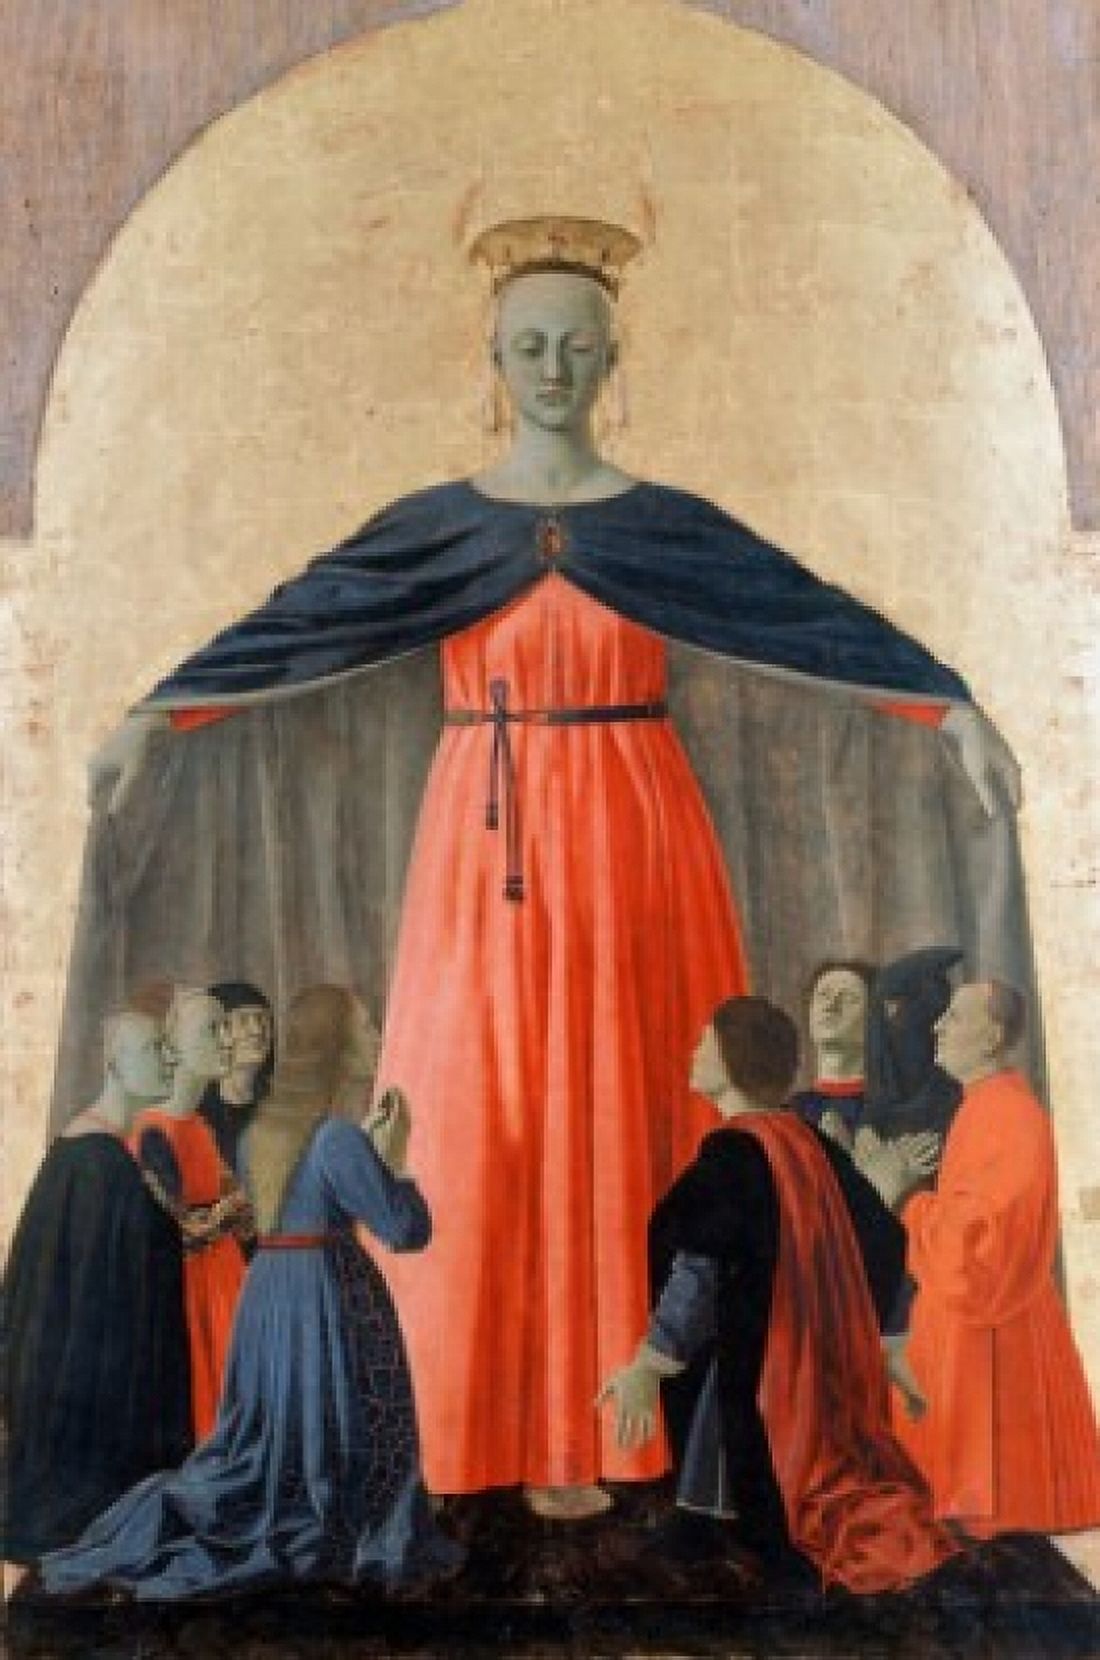 Madonna of Mercy, Piero della Francesca (1410/20-1492 Italian), Civic Museum, Sansepolcro, Italy Poster Print (18 x 24) - image 1 of 1